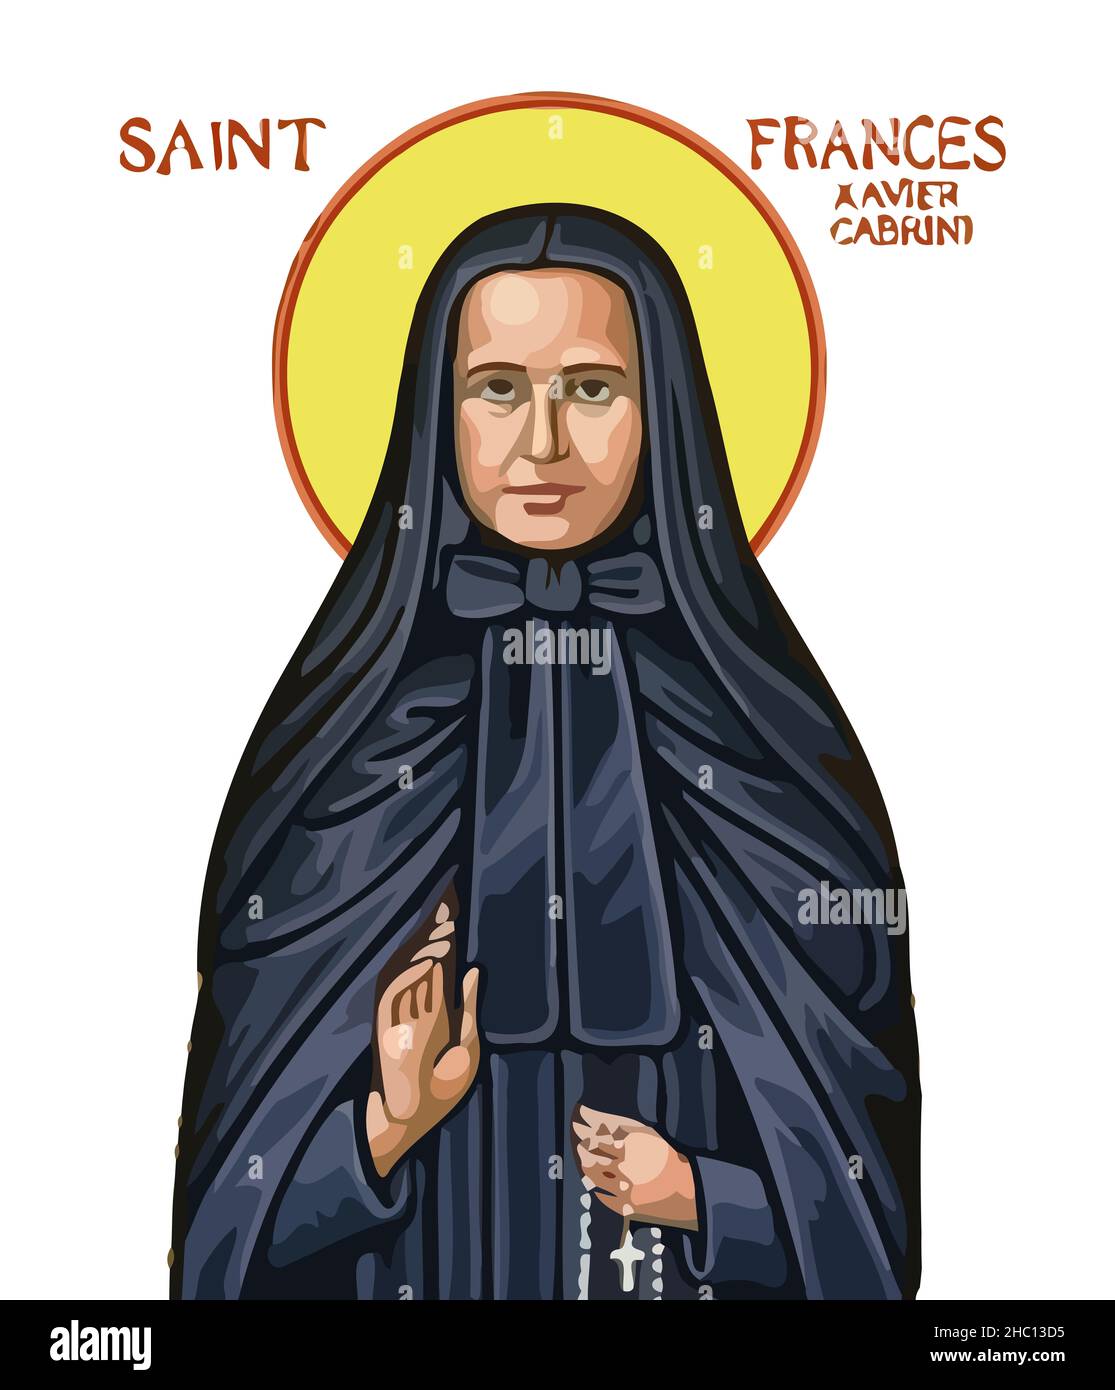 saint frances xavier cabrini  faith religion illustration Stock Photo